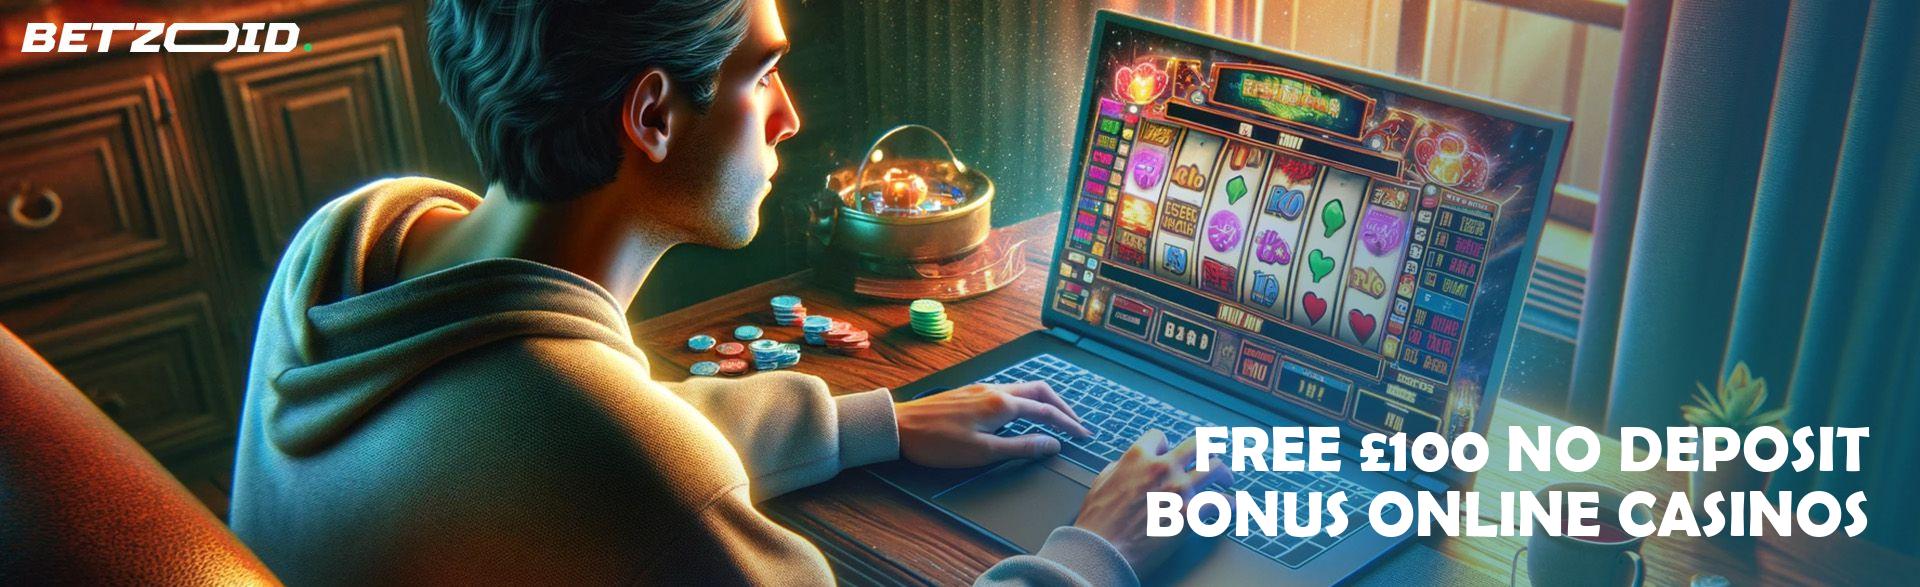 Free £100 No Deposit Bonus Online Casinos.